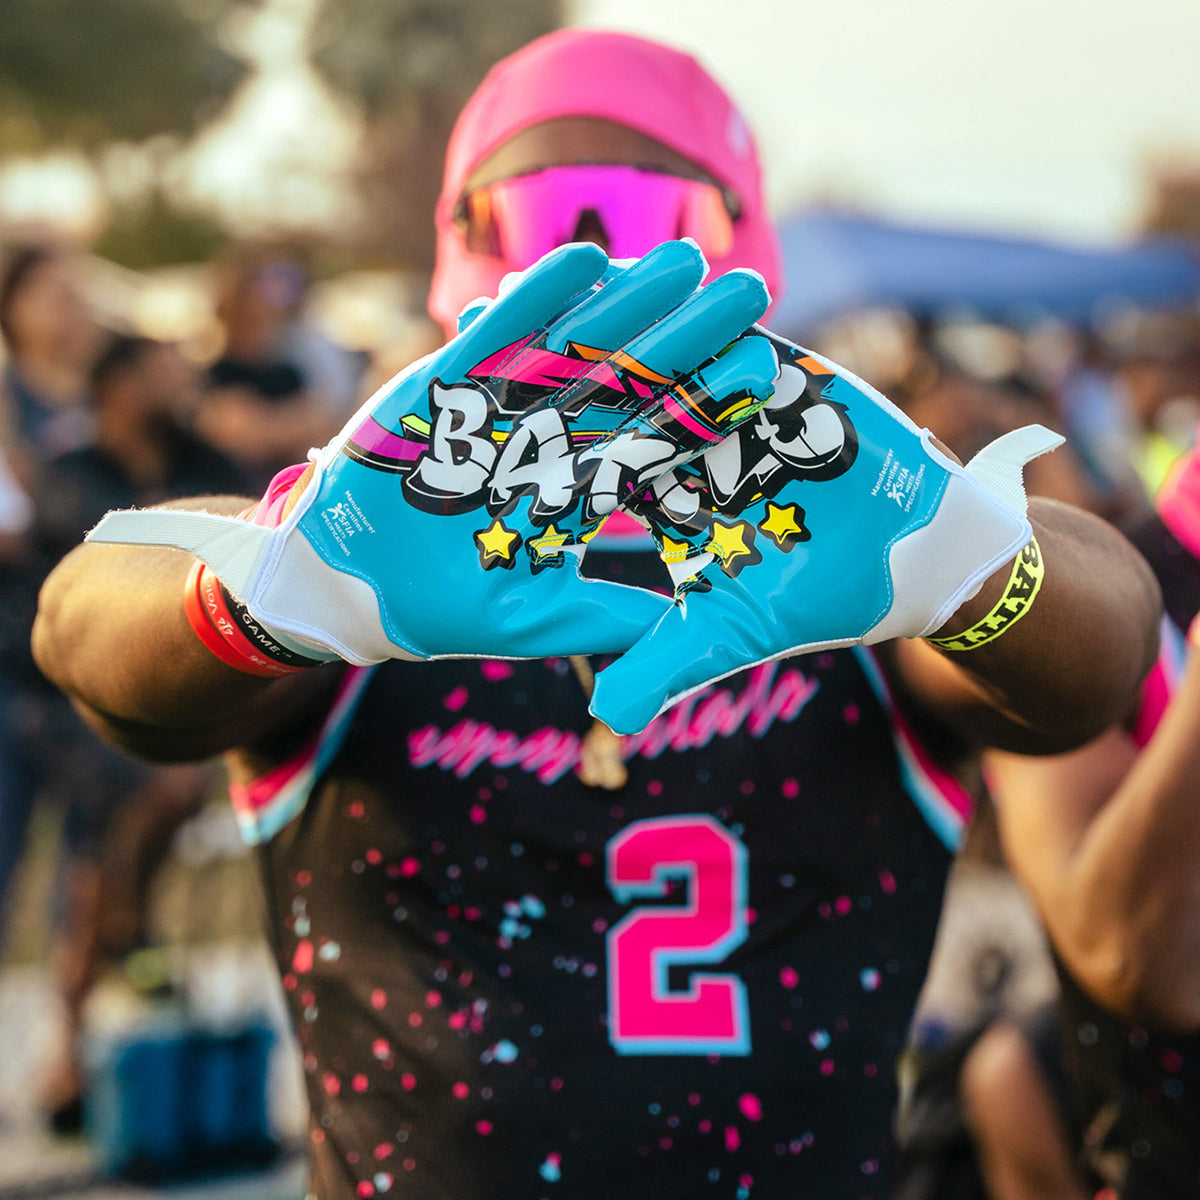 Battle Sports Graffiti23 Doom Adult Football Receiver Gloves Battle Sports